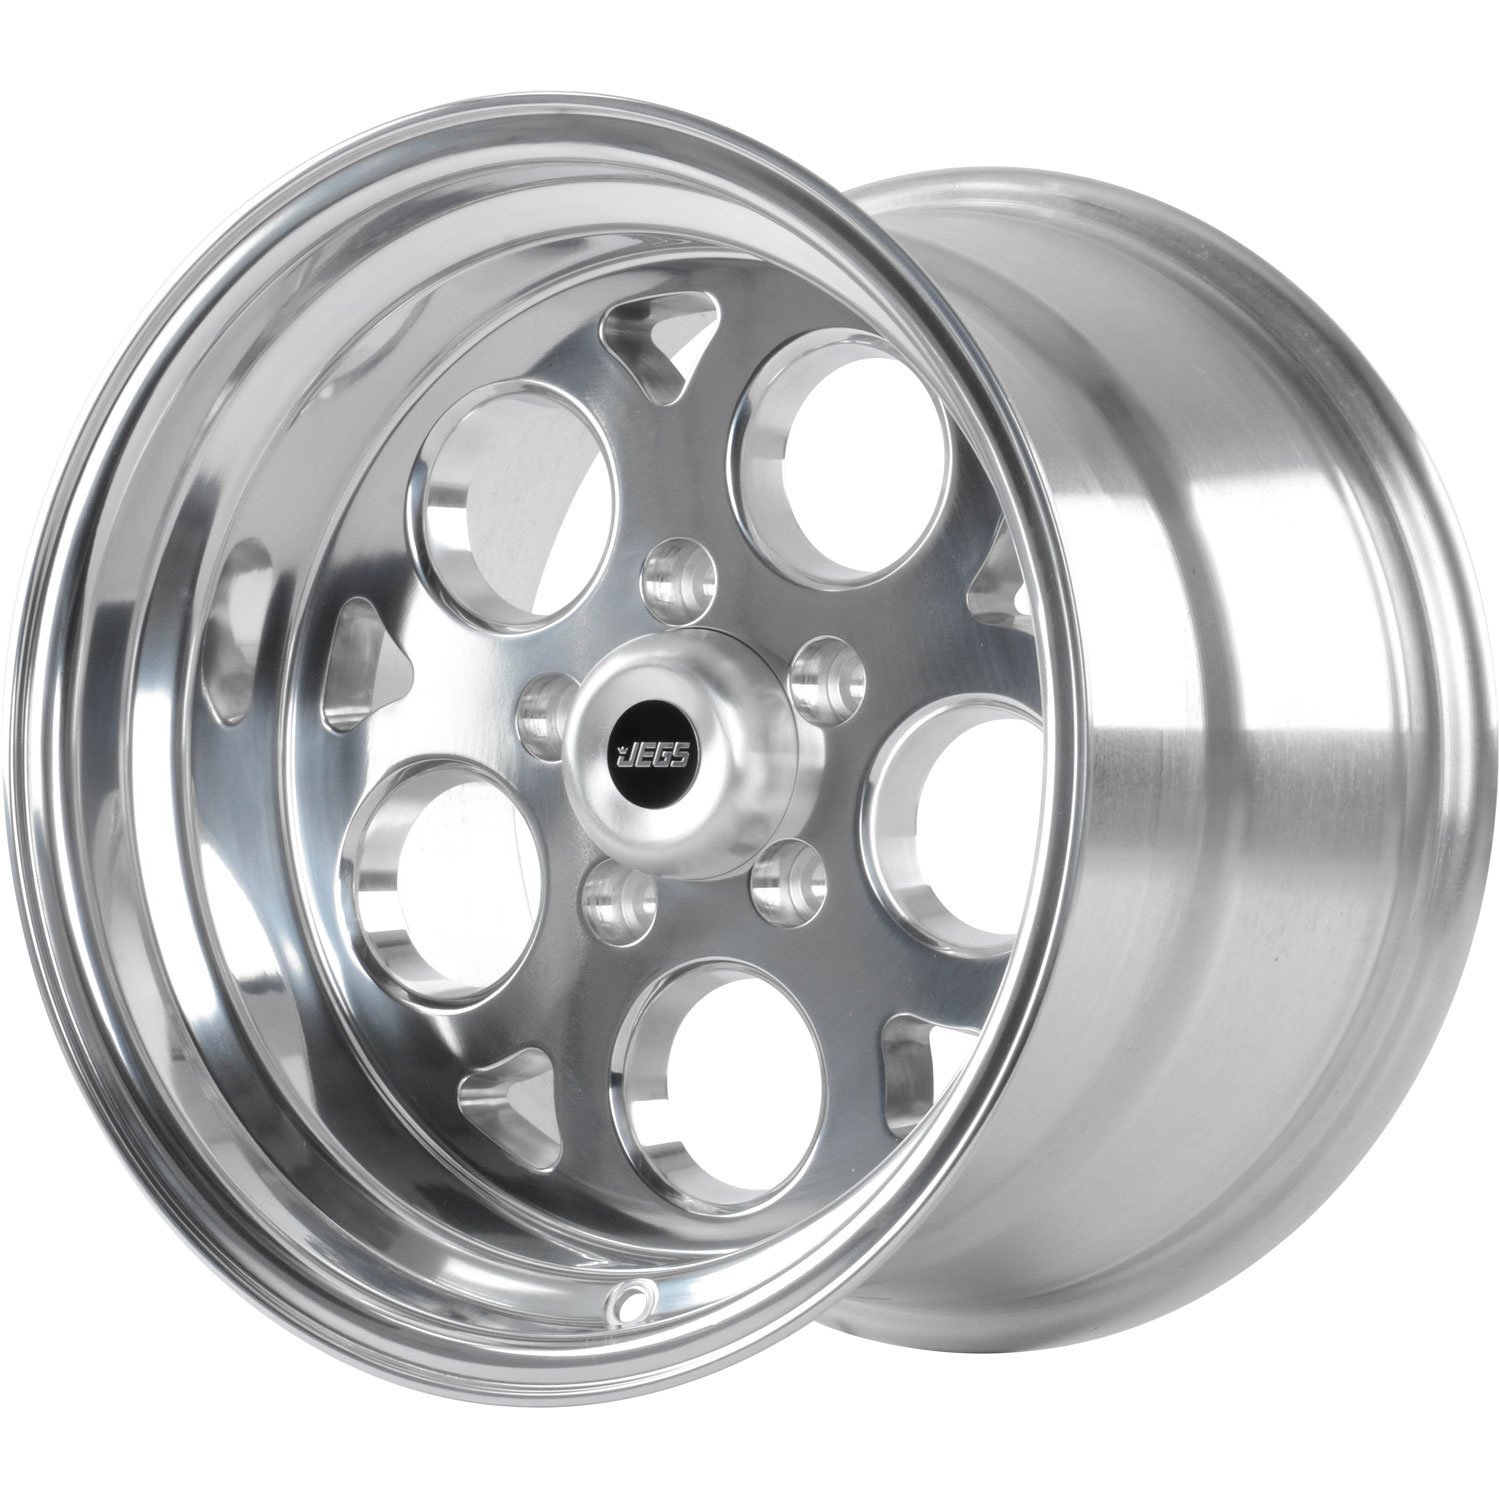 JEGS 69039: SSR Mag Wheel | Size: 15" x 10" | Bolt Pattern: 5 x 4.50" |  Aluminum | Polished Finish - JEGS